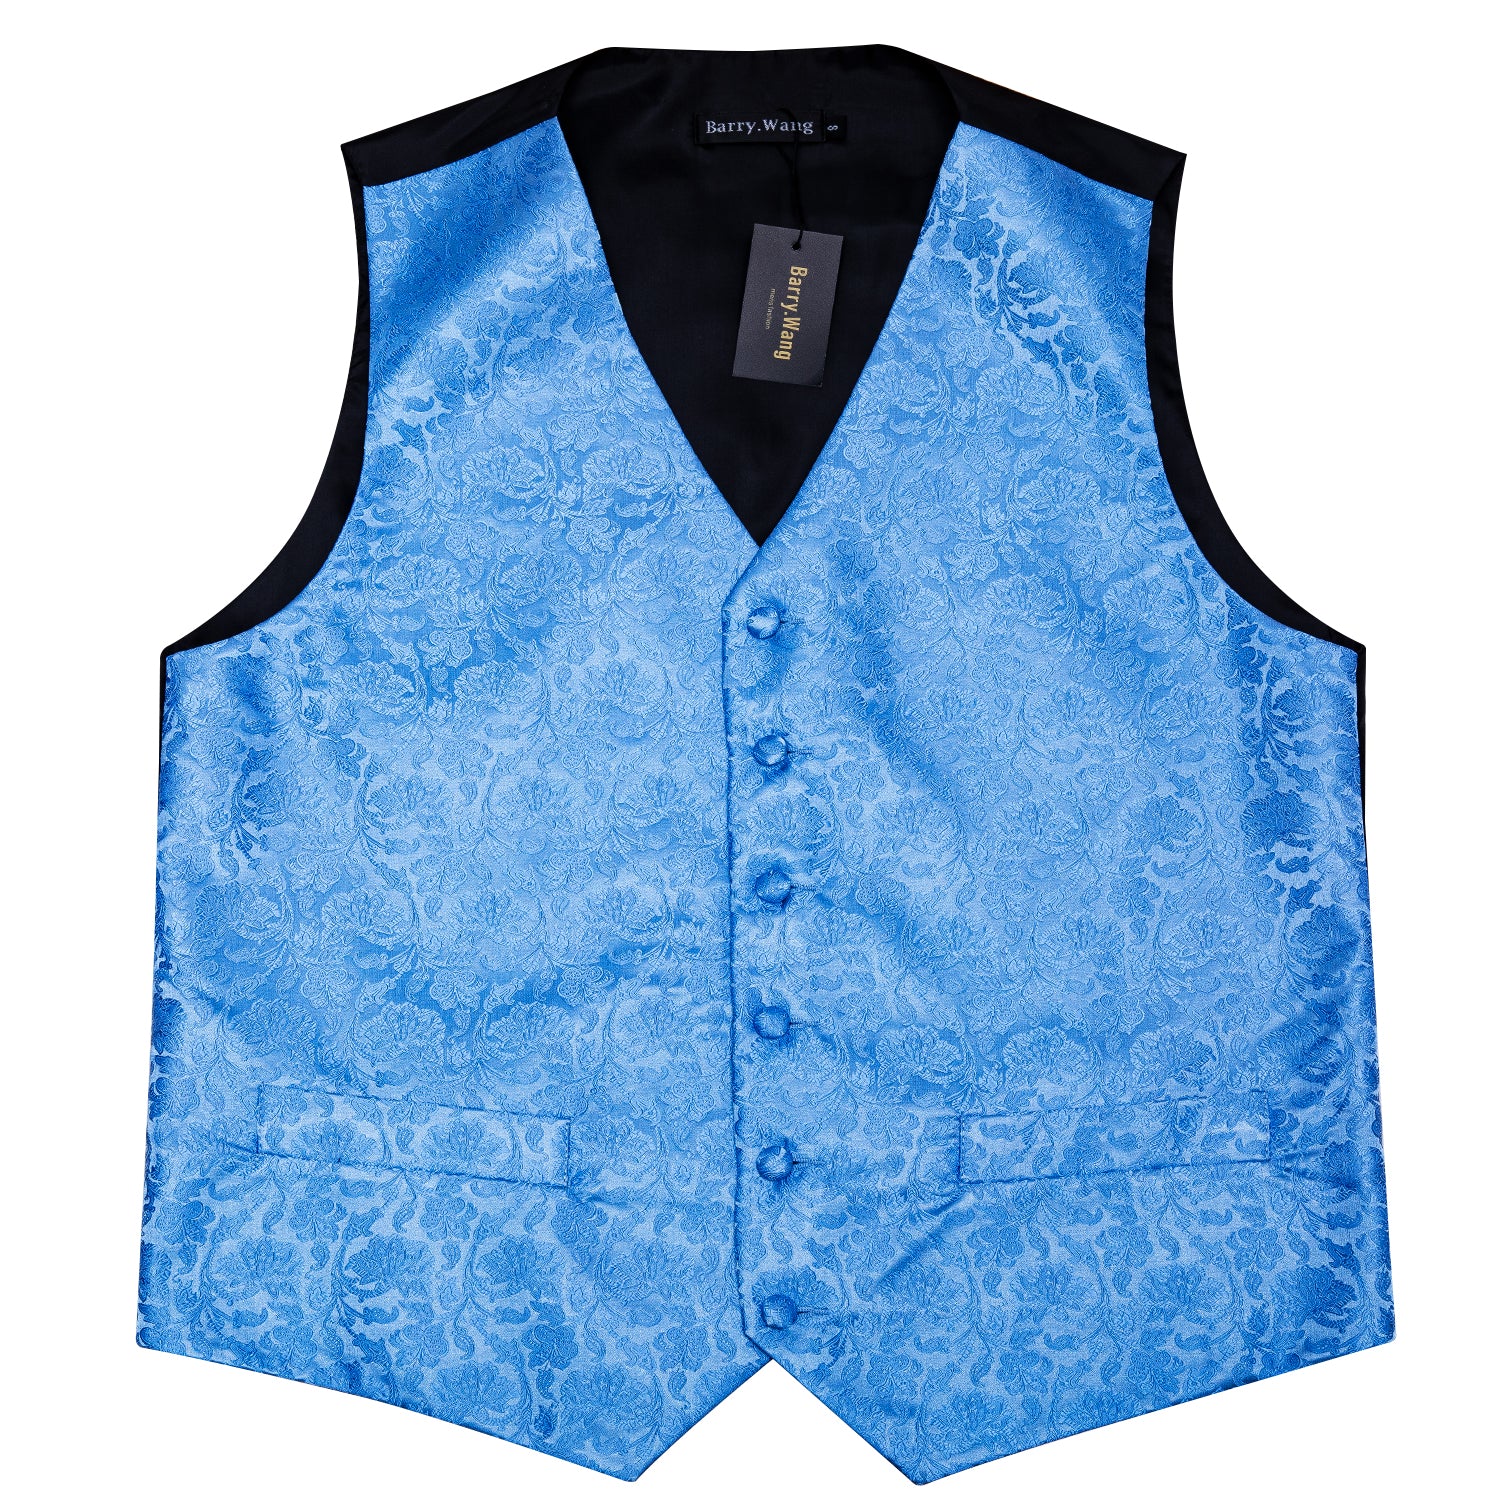 Men's Light Blue Floral Silk Vest Necktie Pocket square Cufflinks